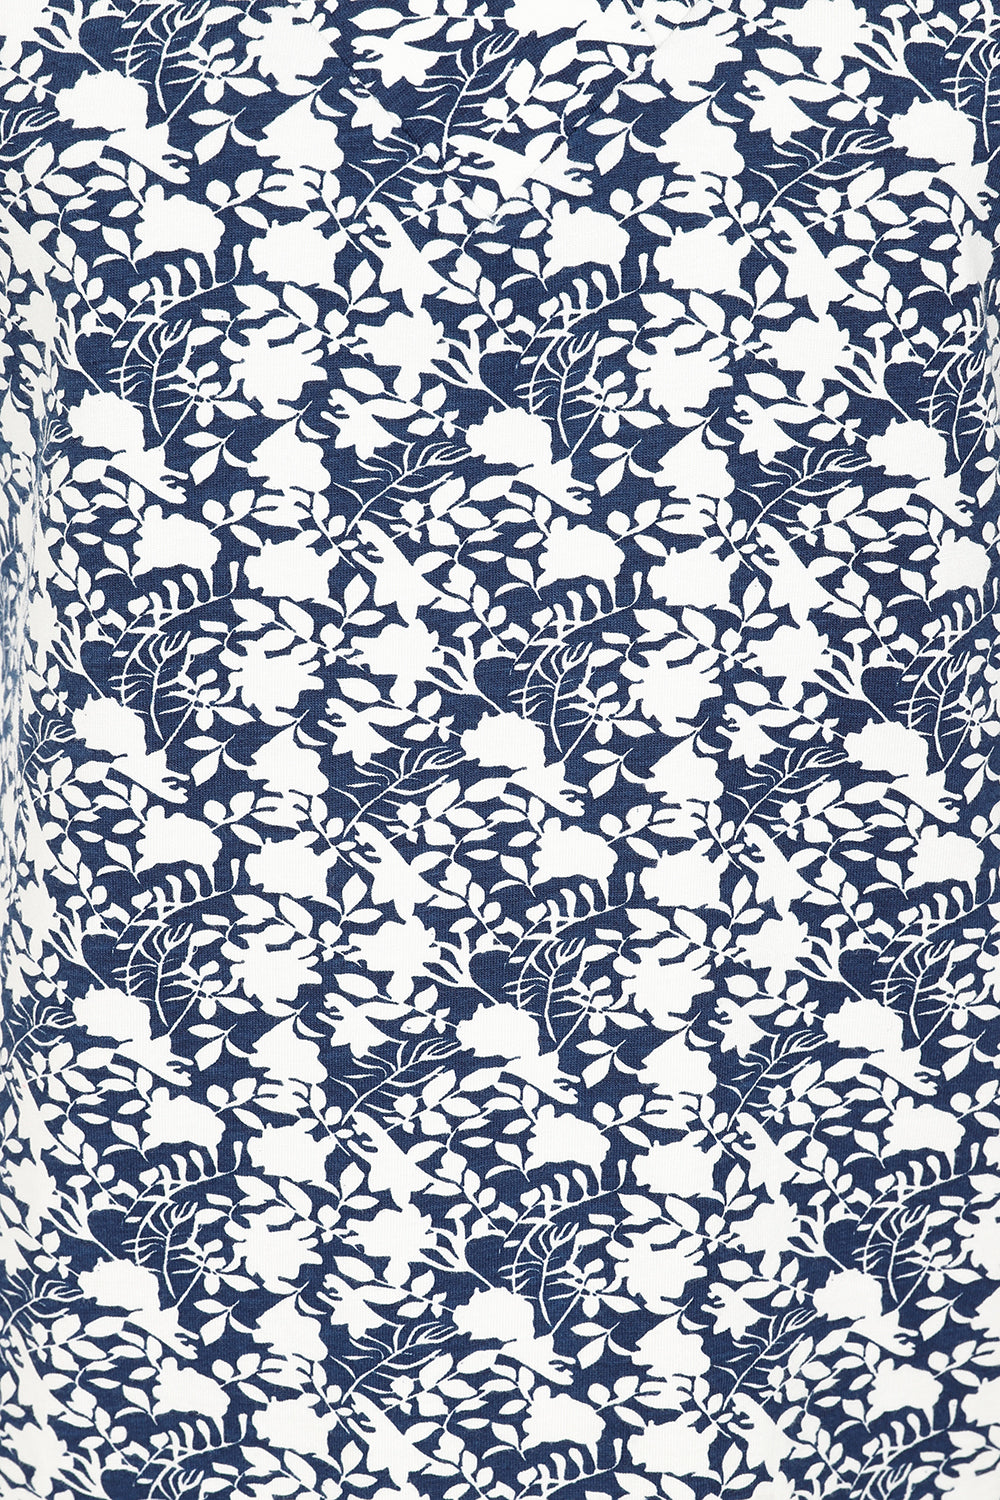 Fauna Top - Navy Foliage print - GOTS Organic Cotton